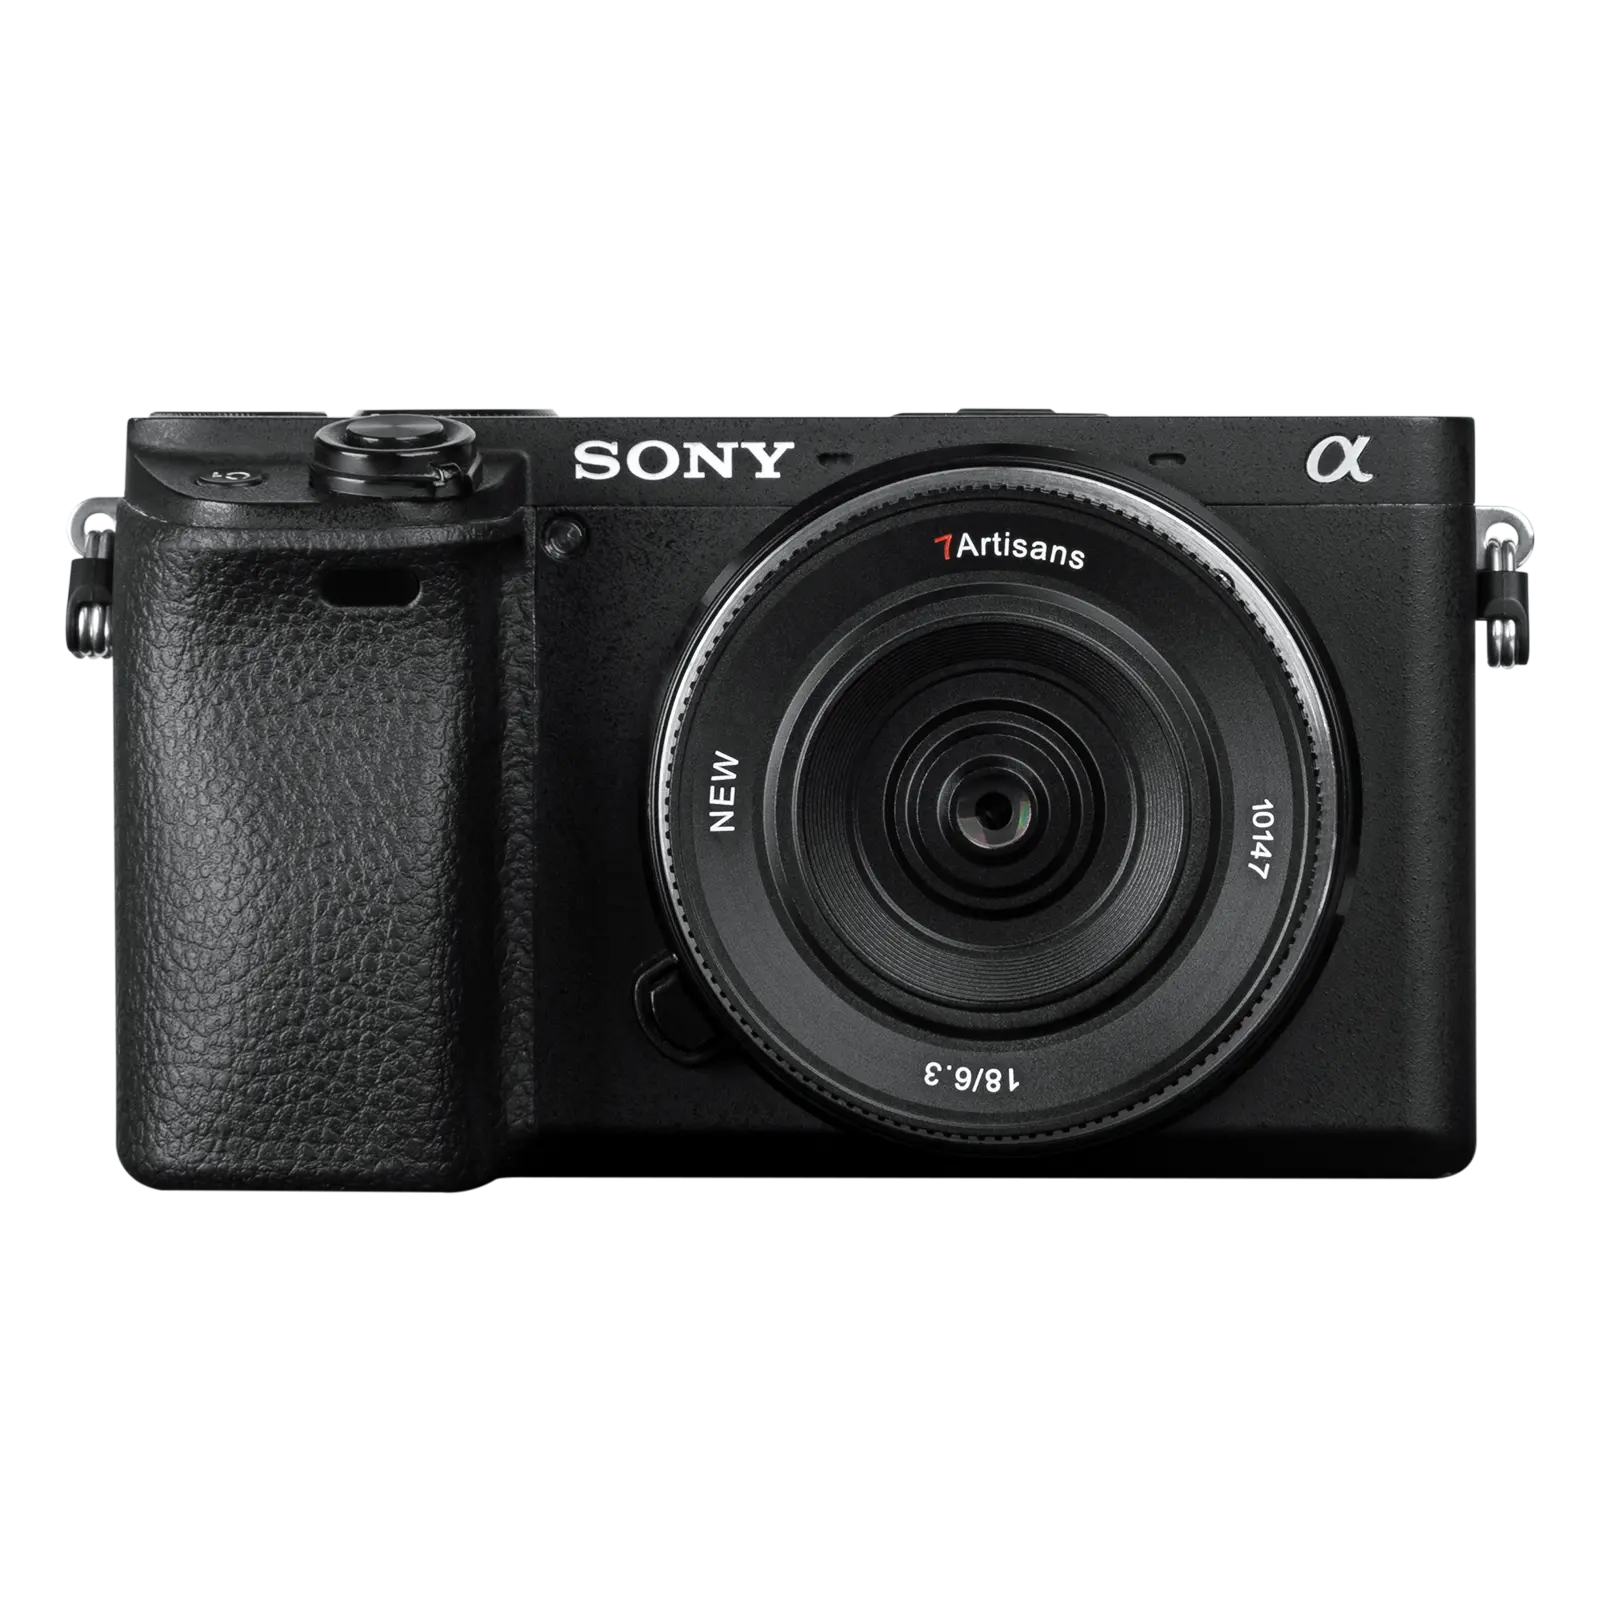 7 pengrajin Lens lensa aksesori kamera untuk kamera Sony E, Canon EOS-M, Fuji FX, Nikon Z, M43 dengan kualitas gambar Superior